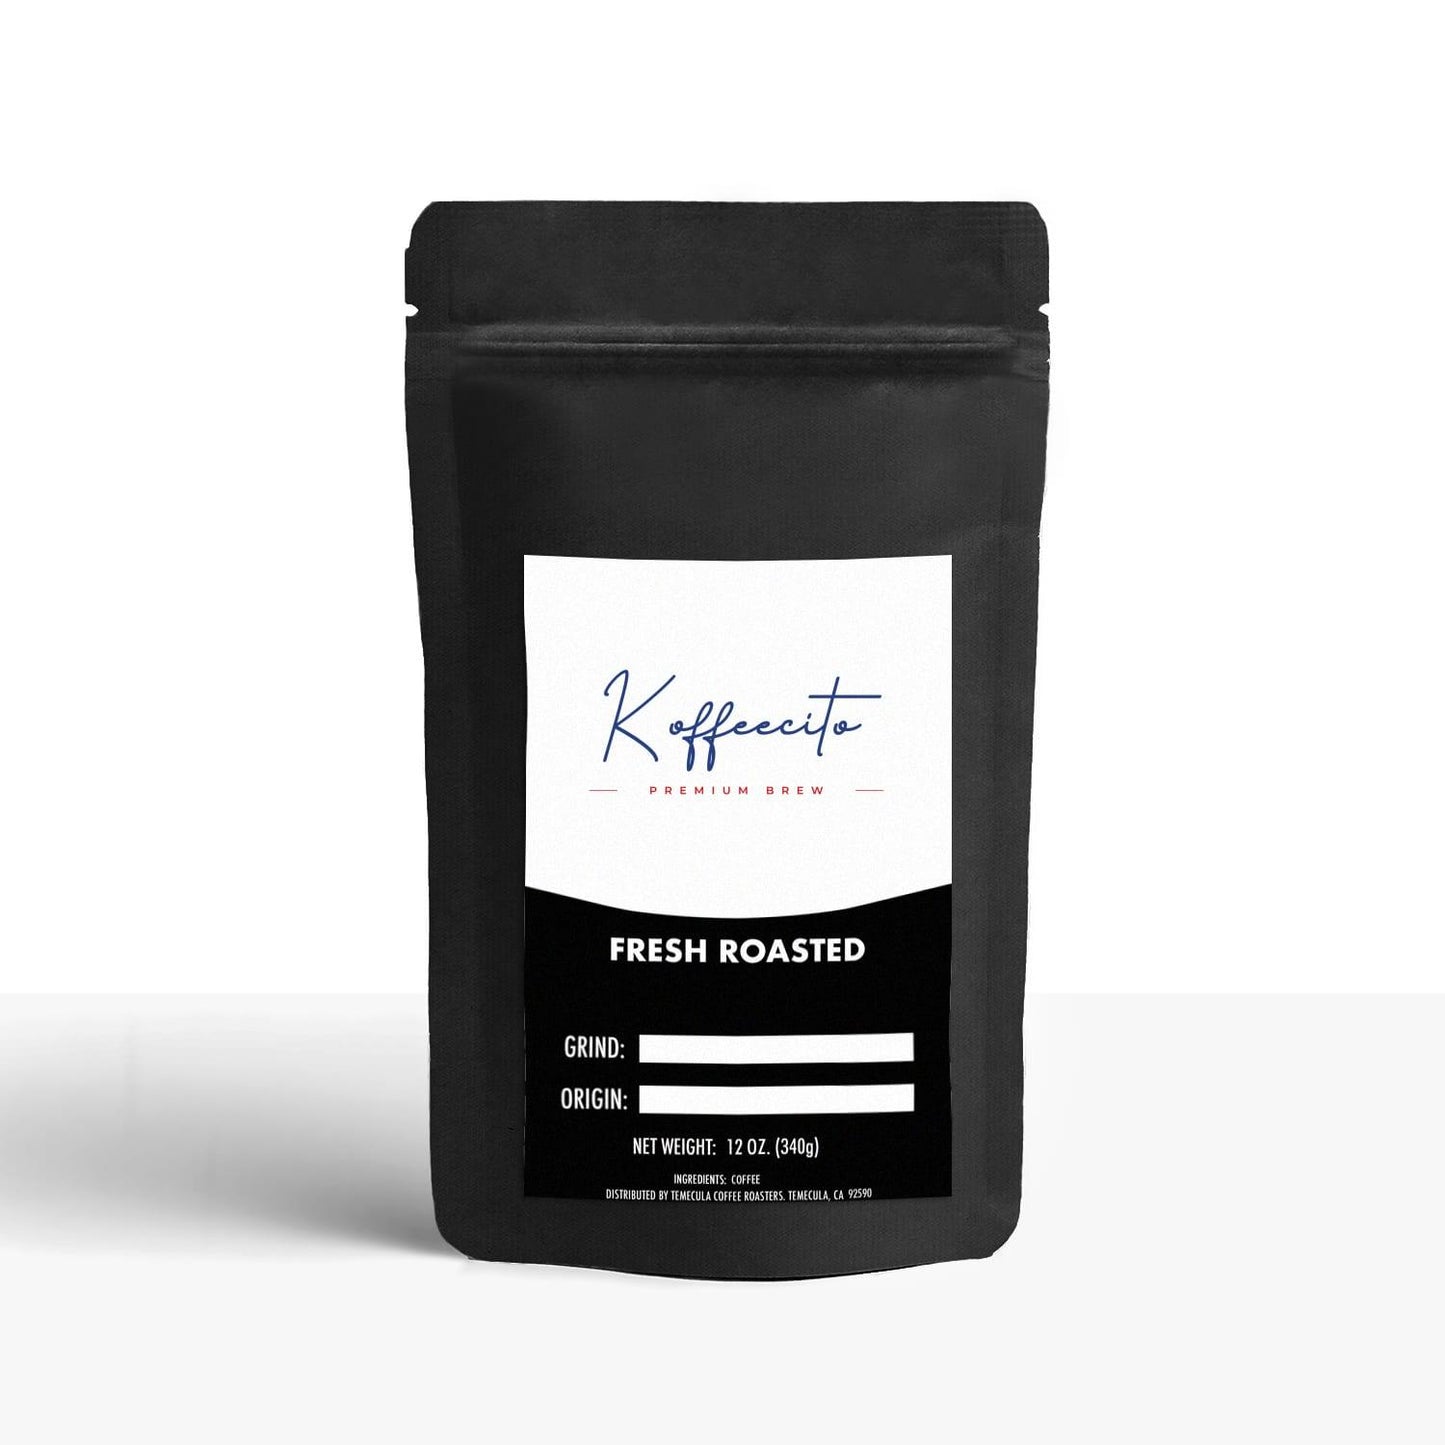 Caramel Flavored coffee - Koffeecito